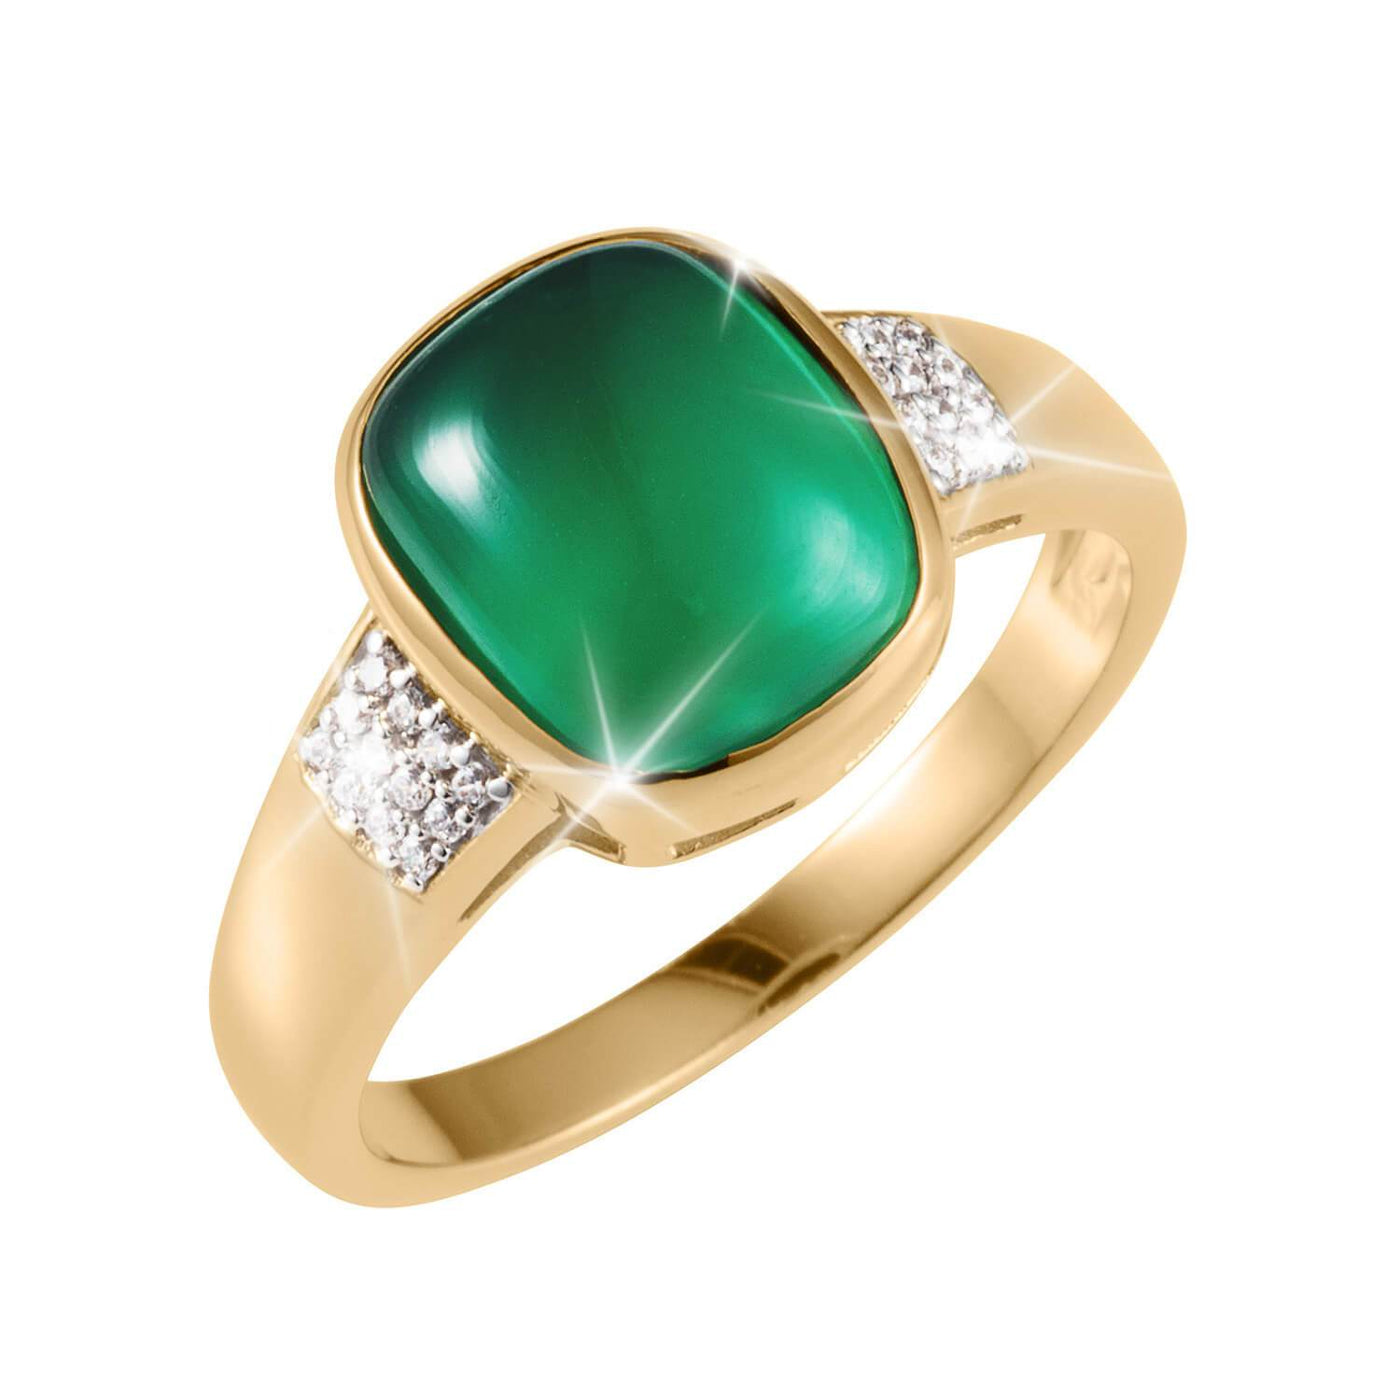 Daniel Steiger Desire Green Onyx Ring